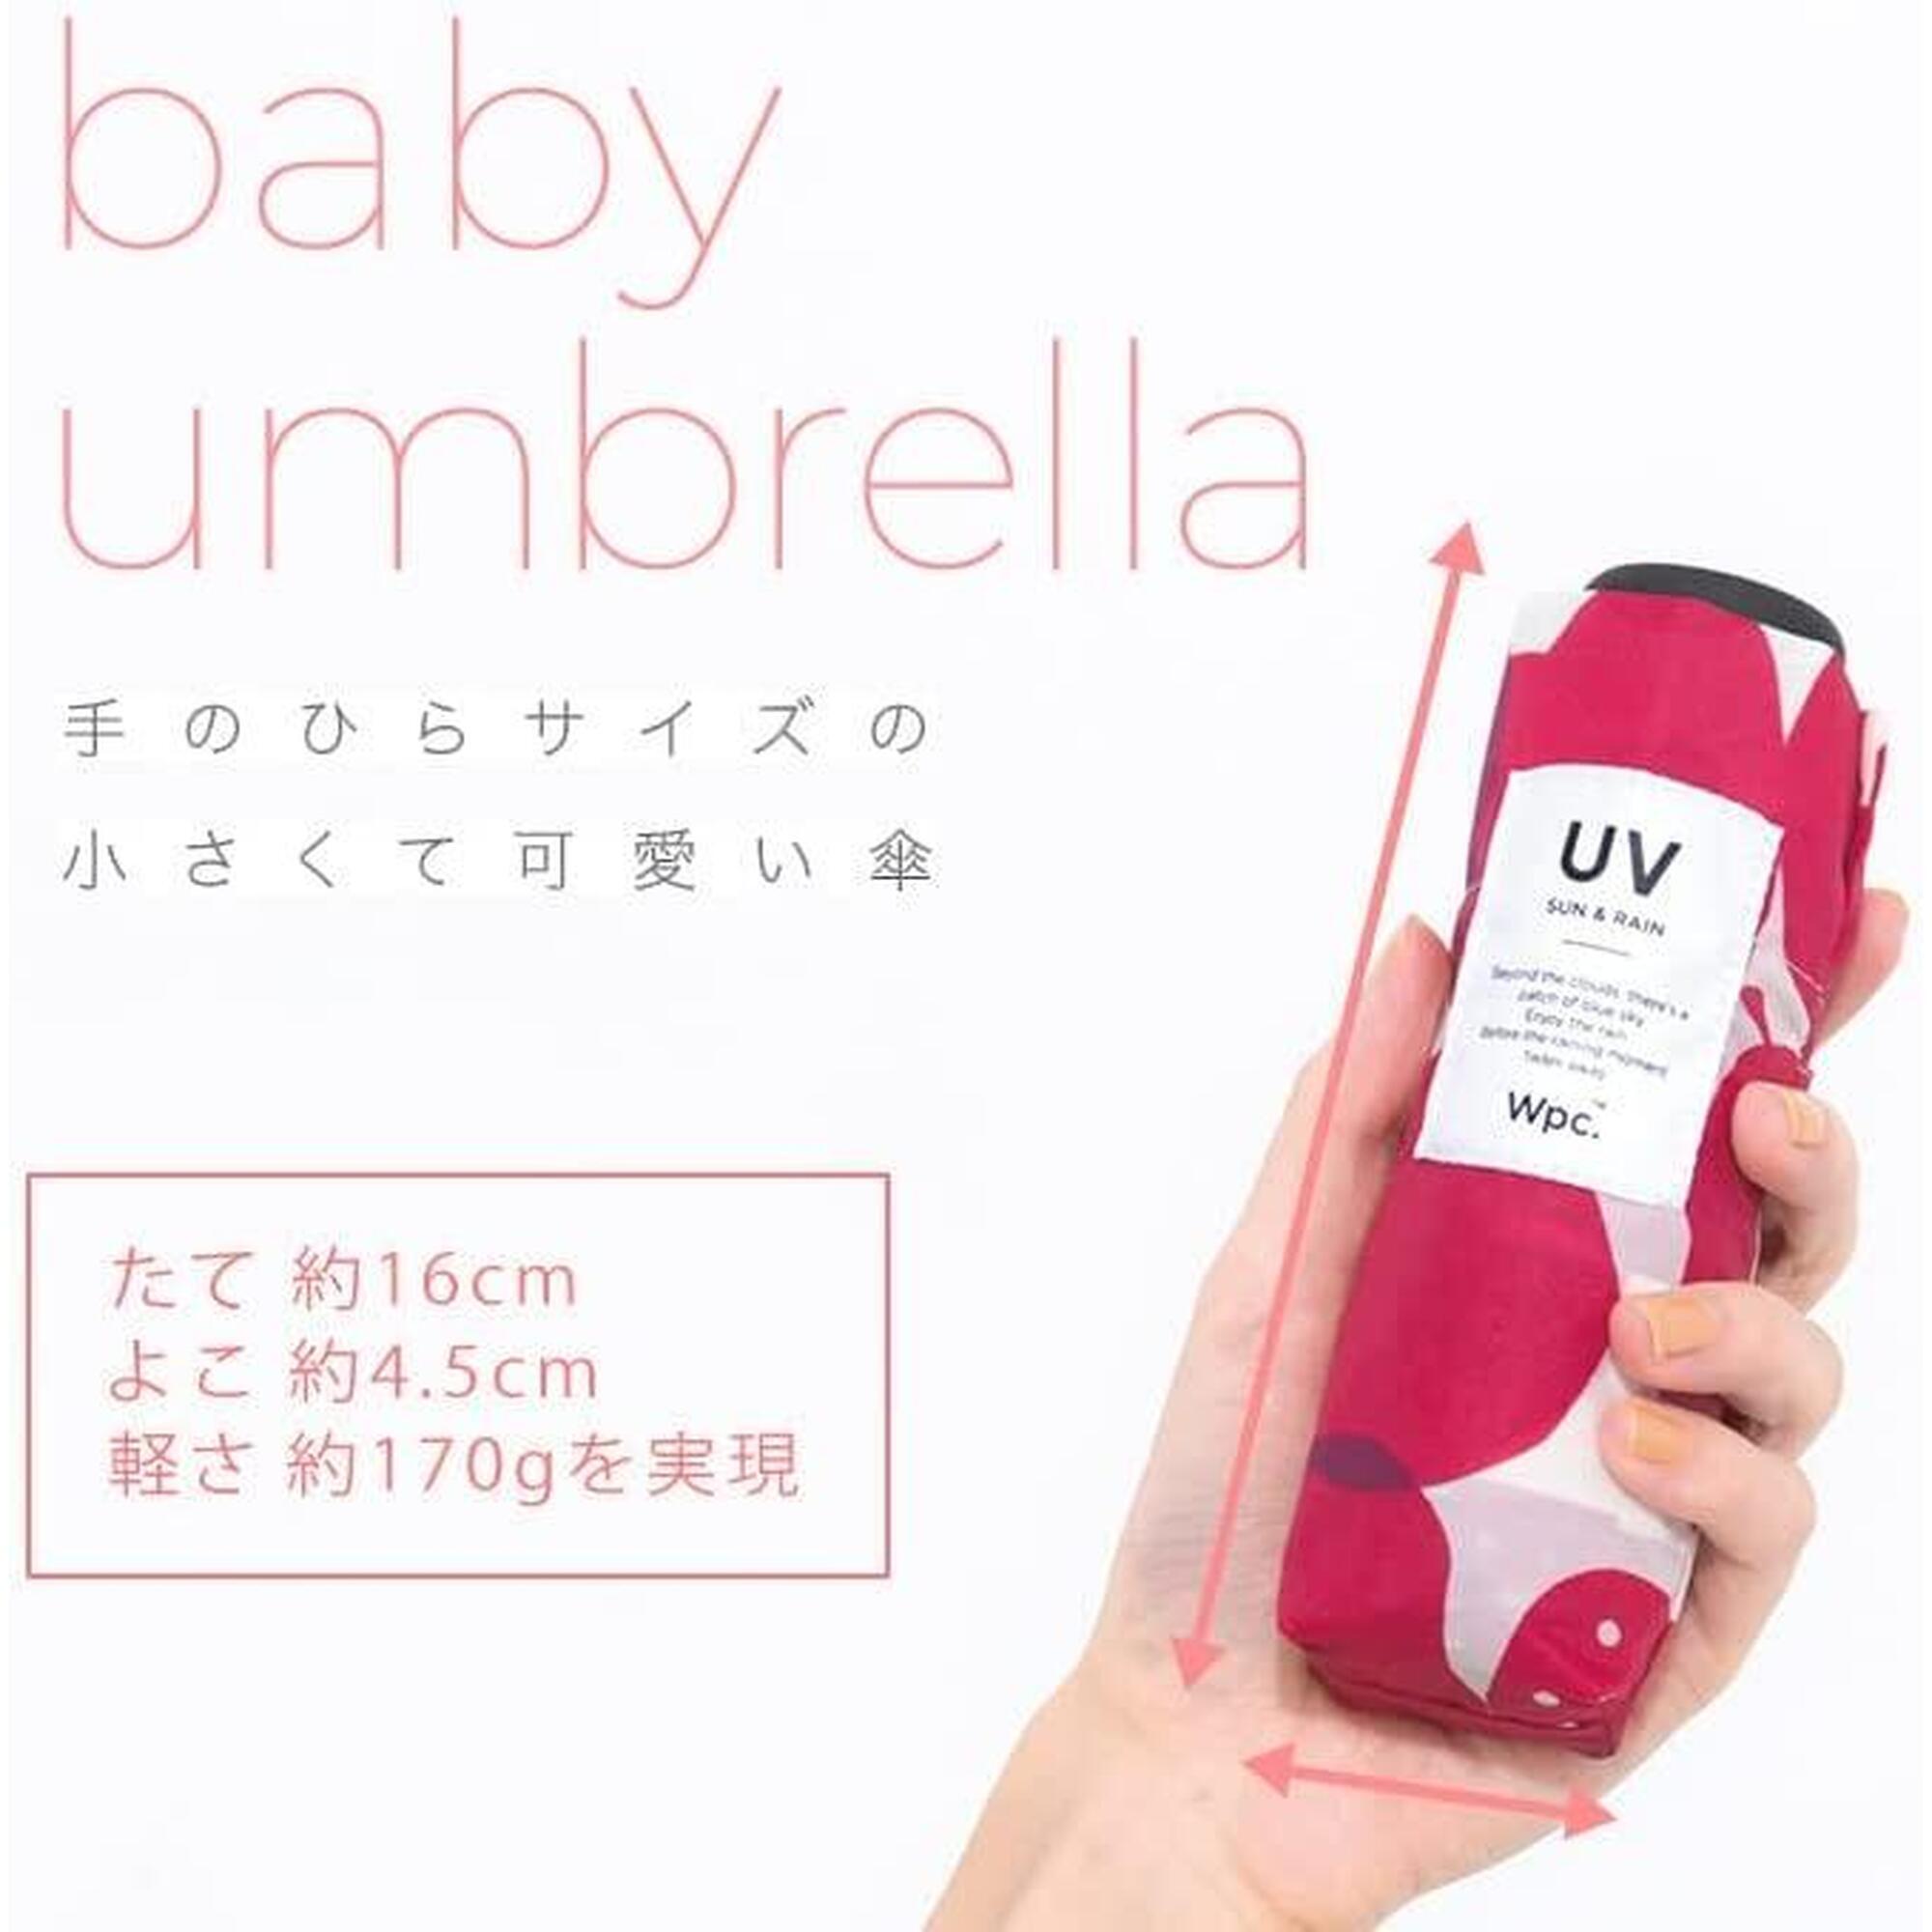 Ultra-light UV-resistant Baby Folding Umbrella - Grey/White